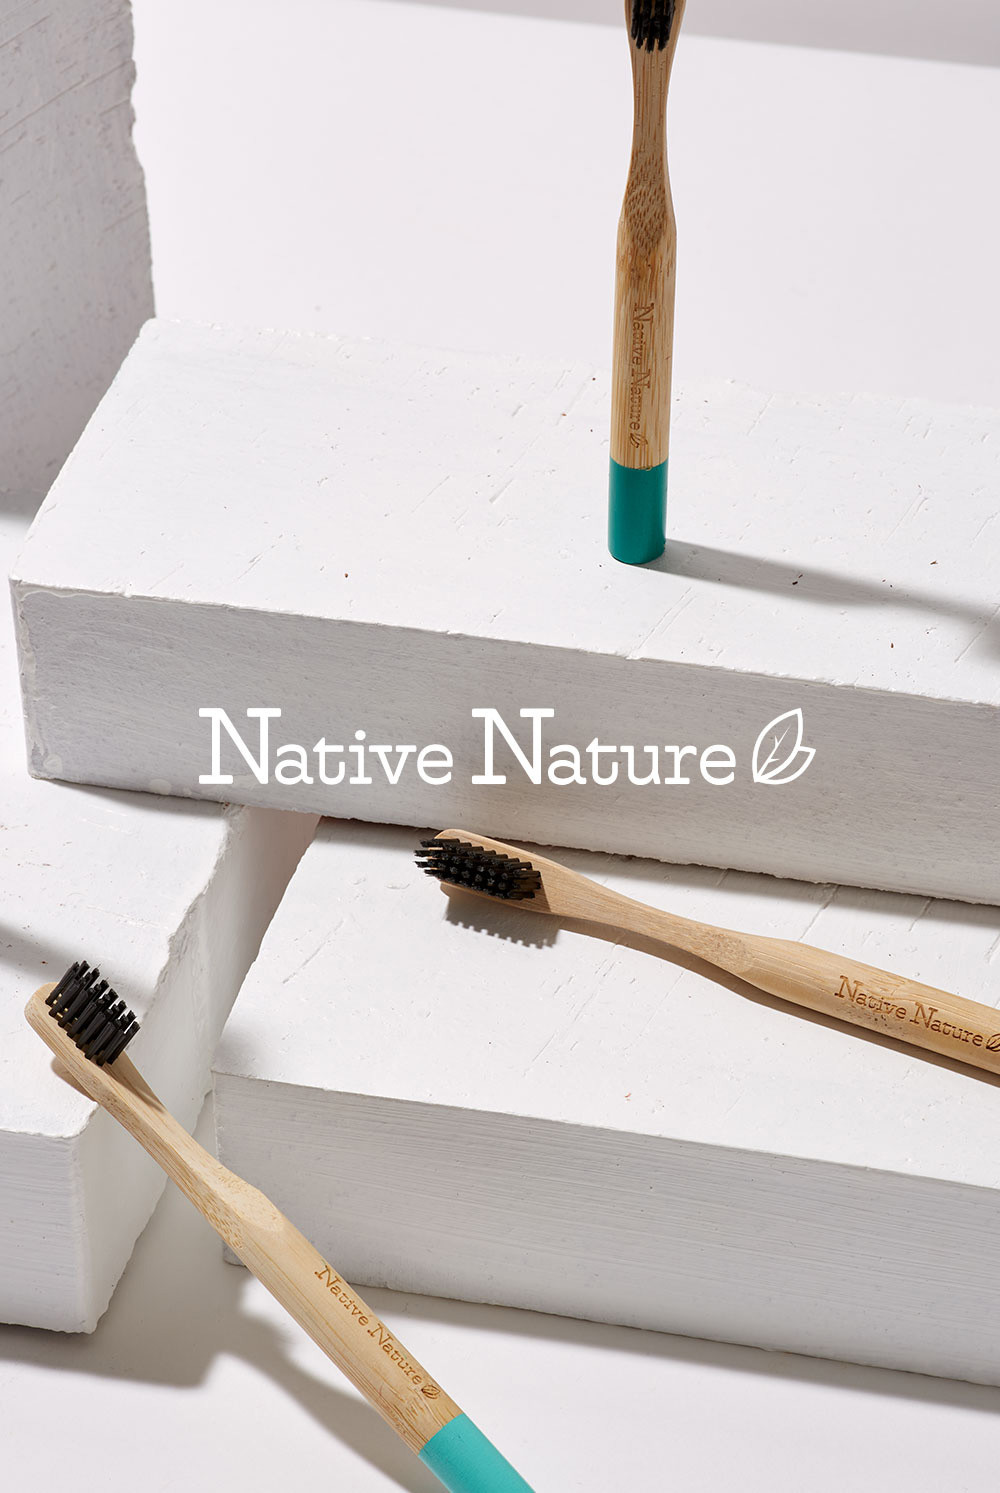 Native Nature